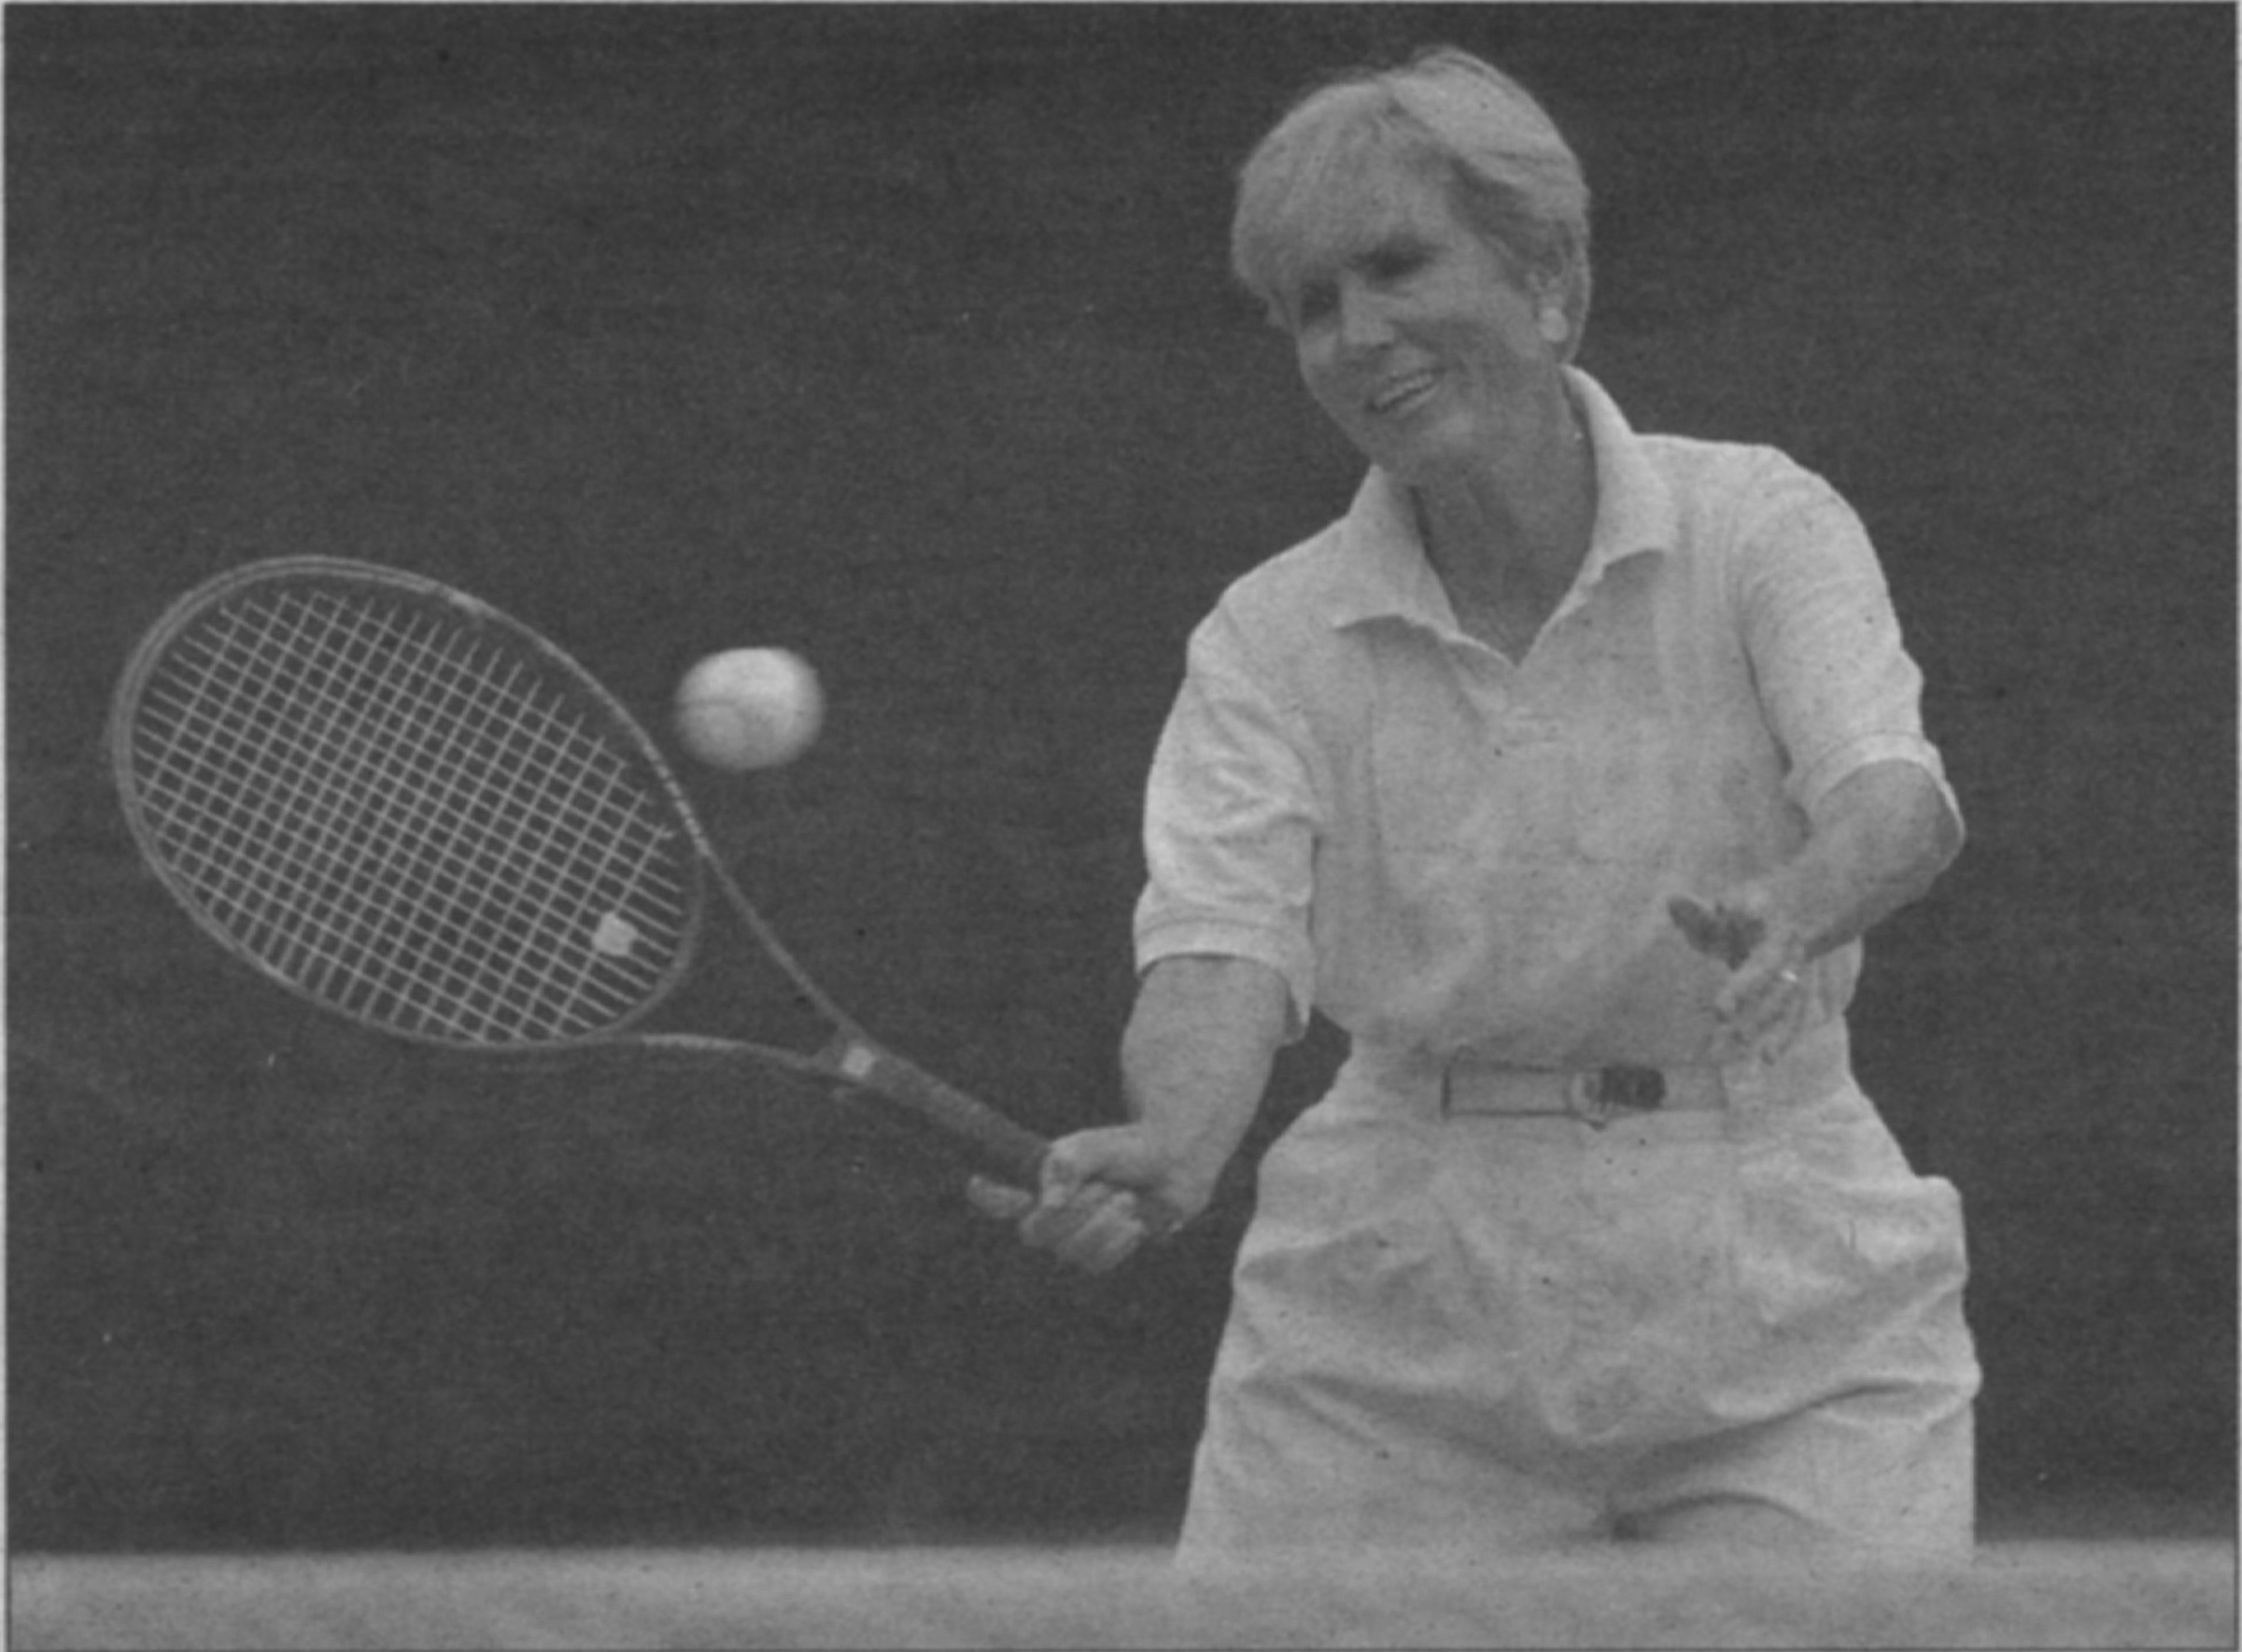 Tennis news: Disturbing reality about Anna Kournikova's career